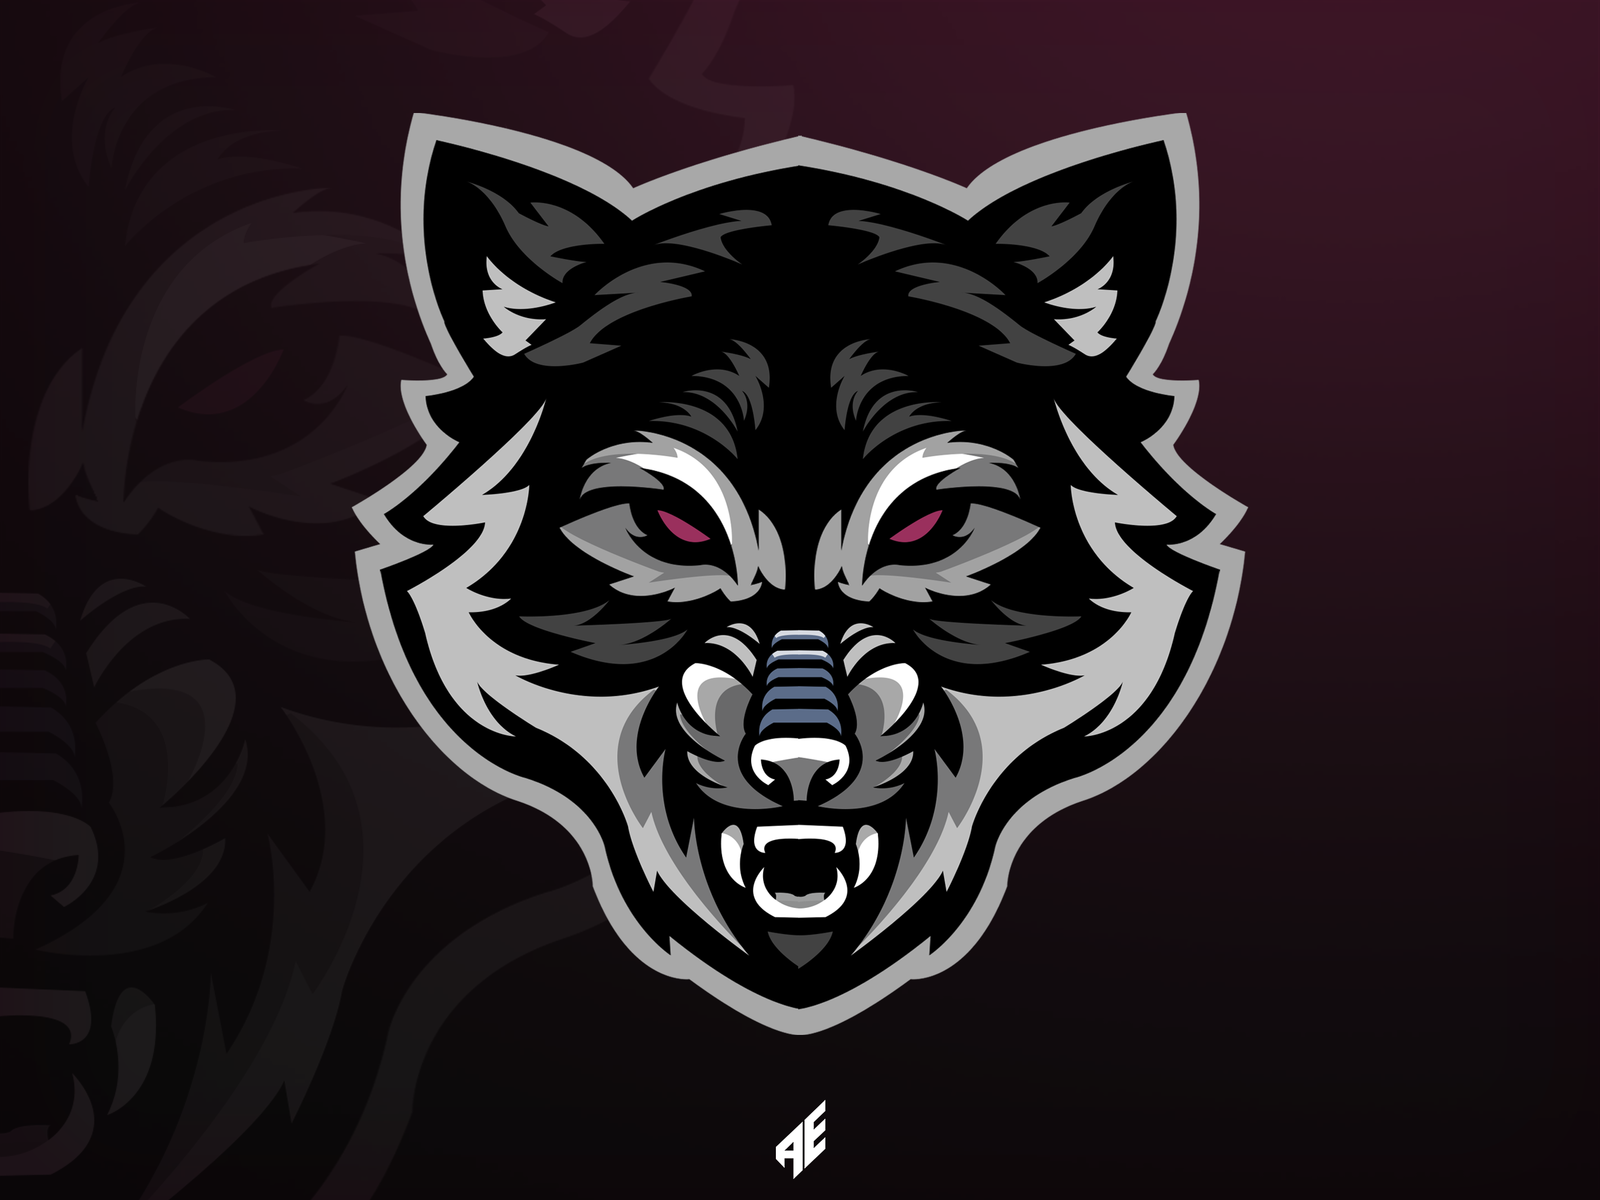 Wolf Mascot logo by Alon Elbaz on Dribbble